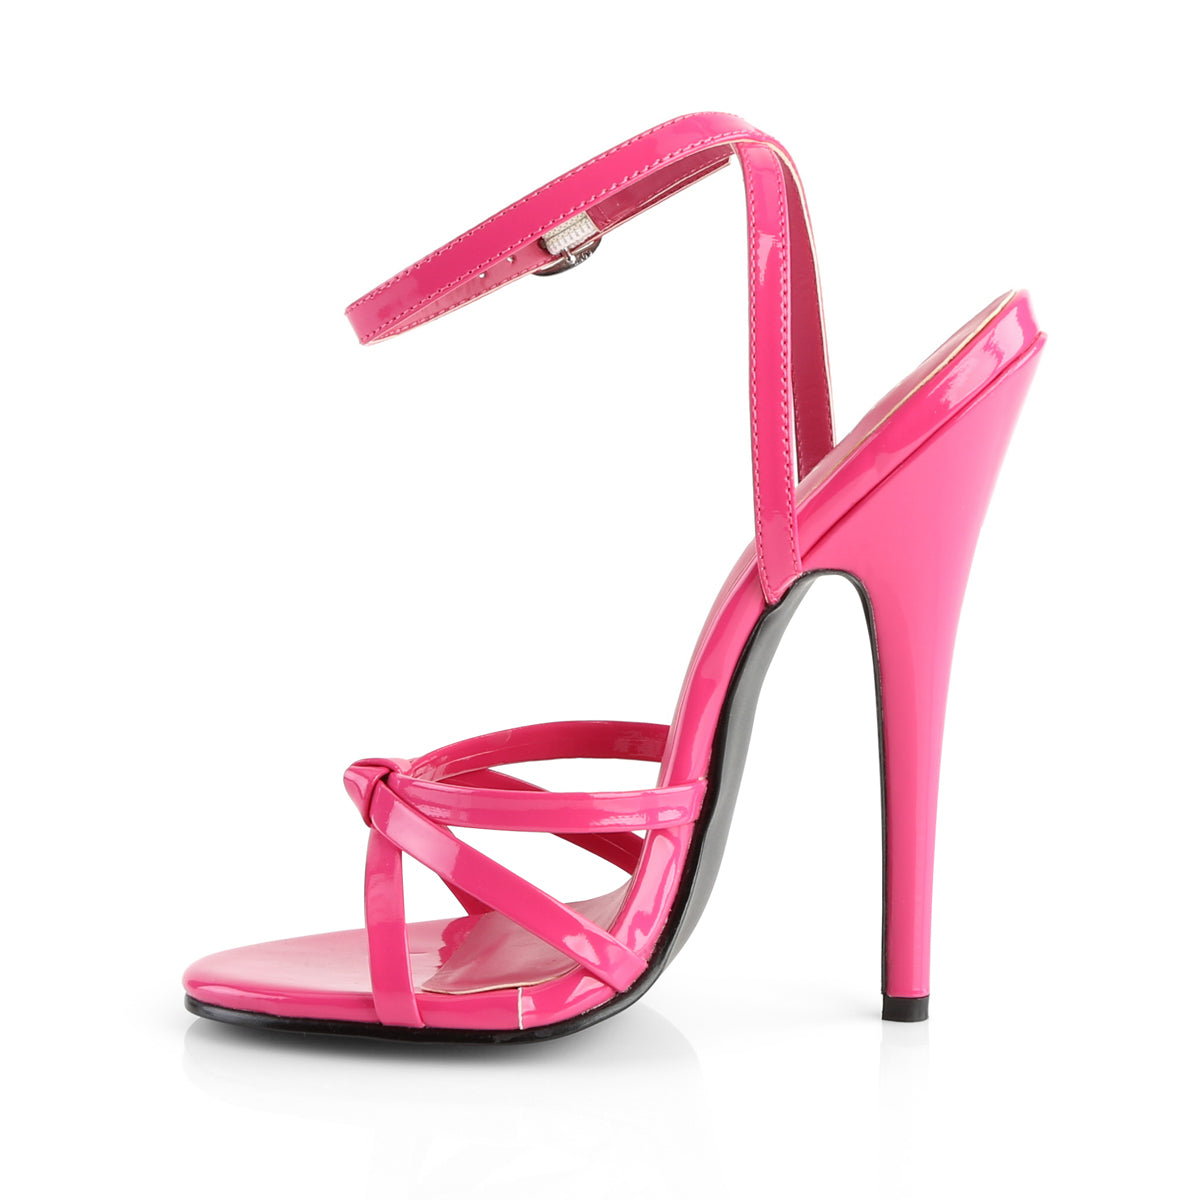 Devious Womens Sandals DOMINA-108 Hot Pink Pat